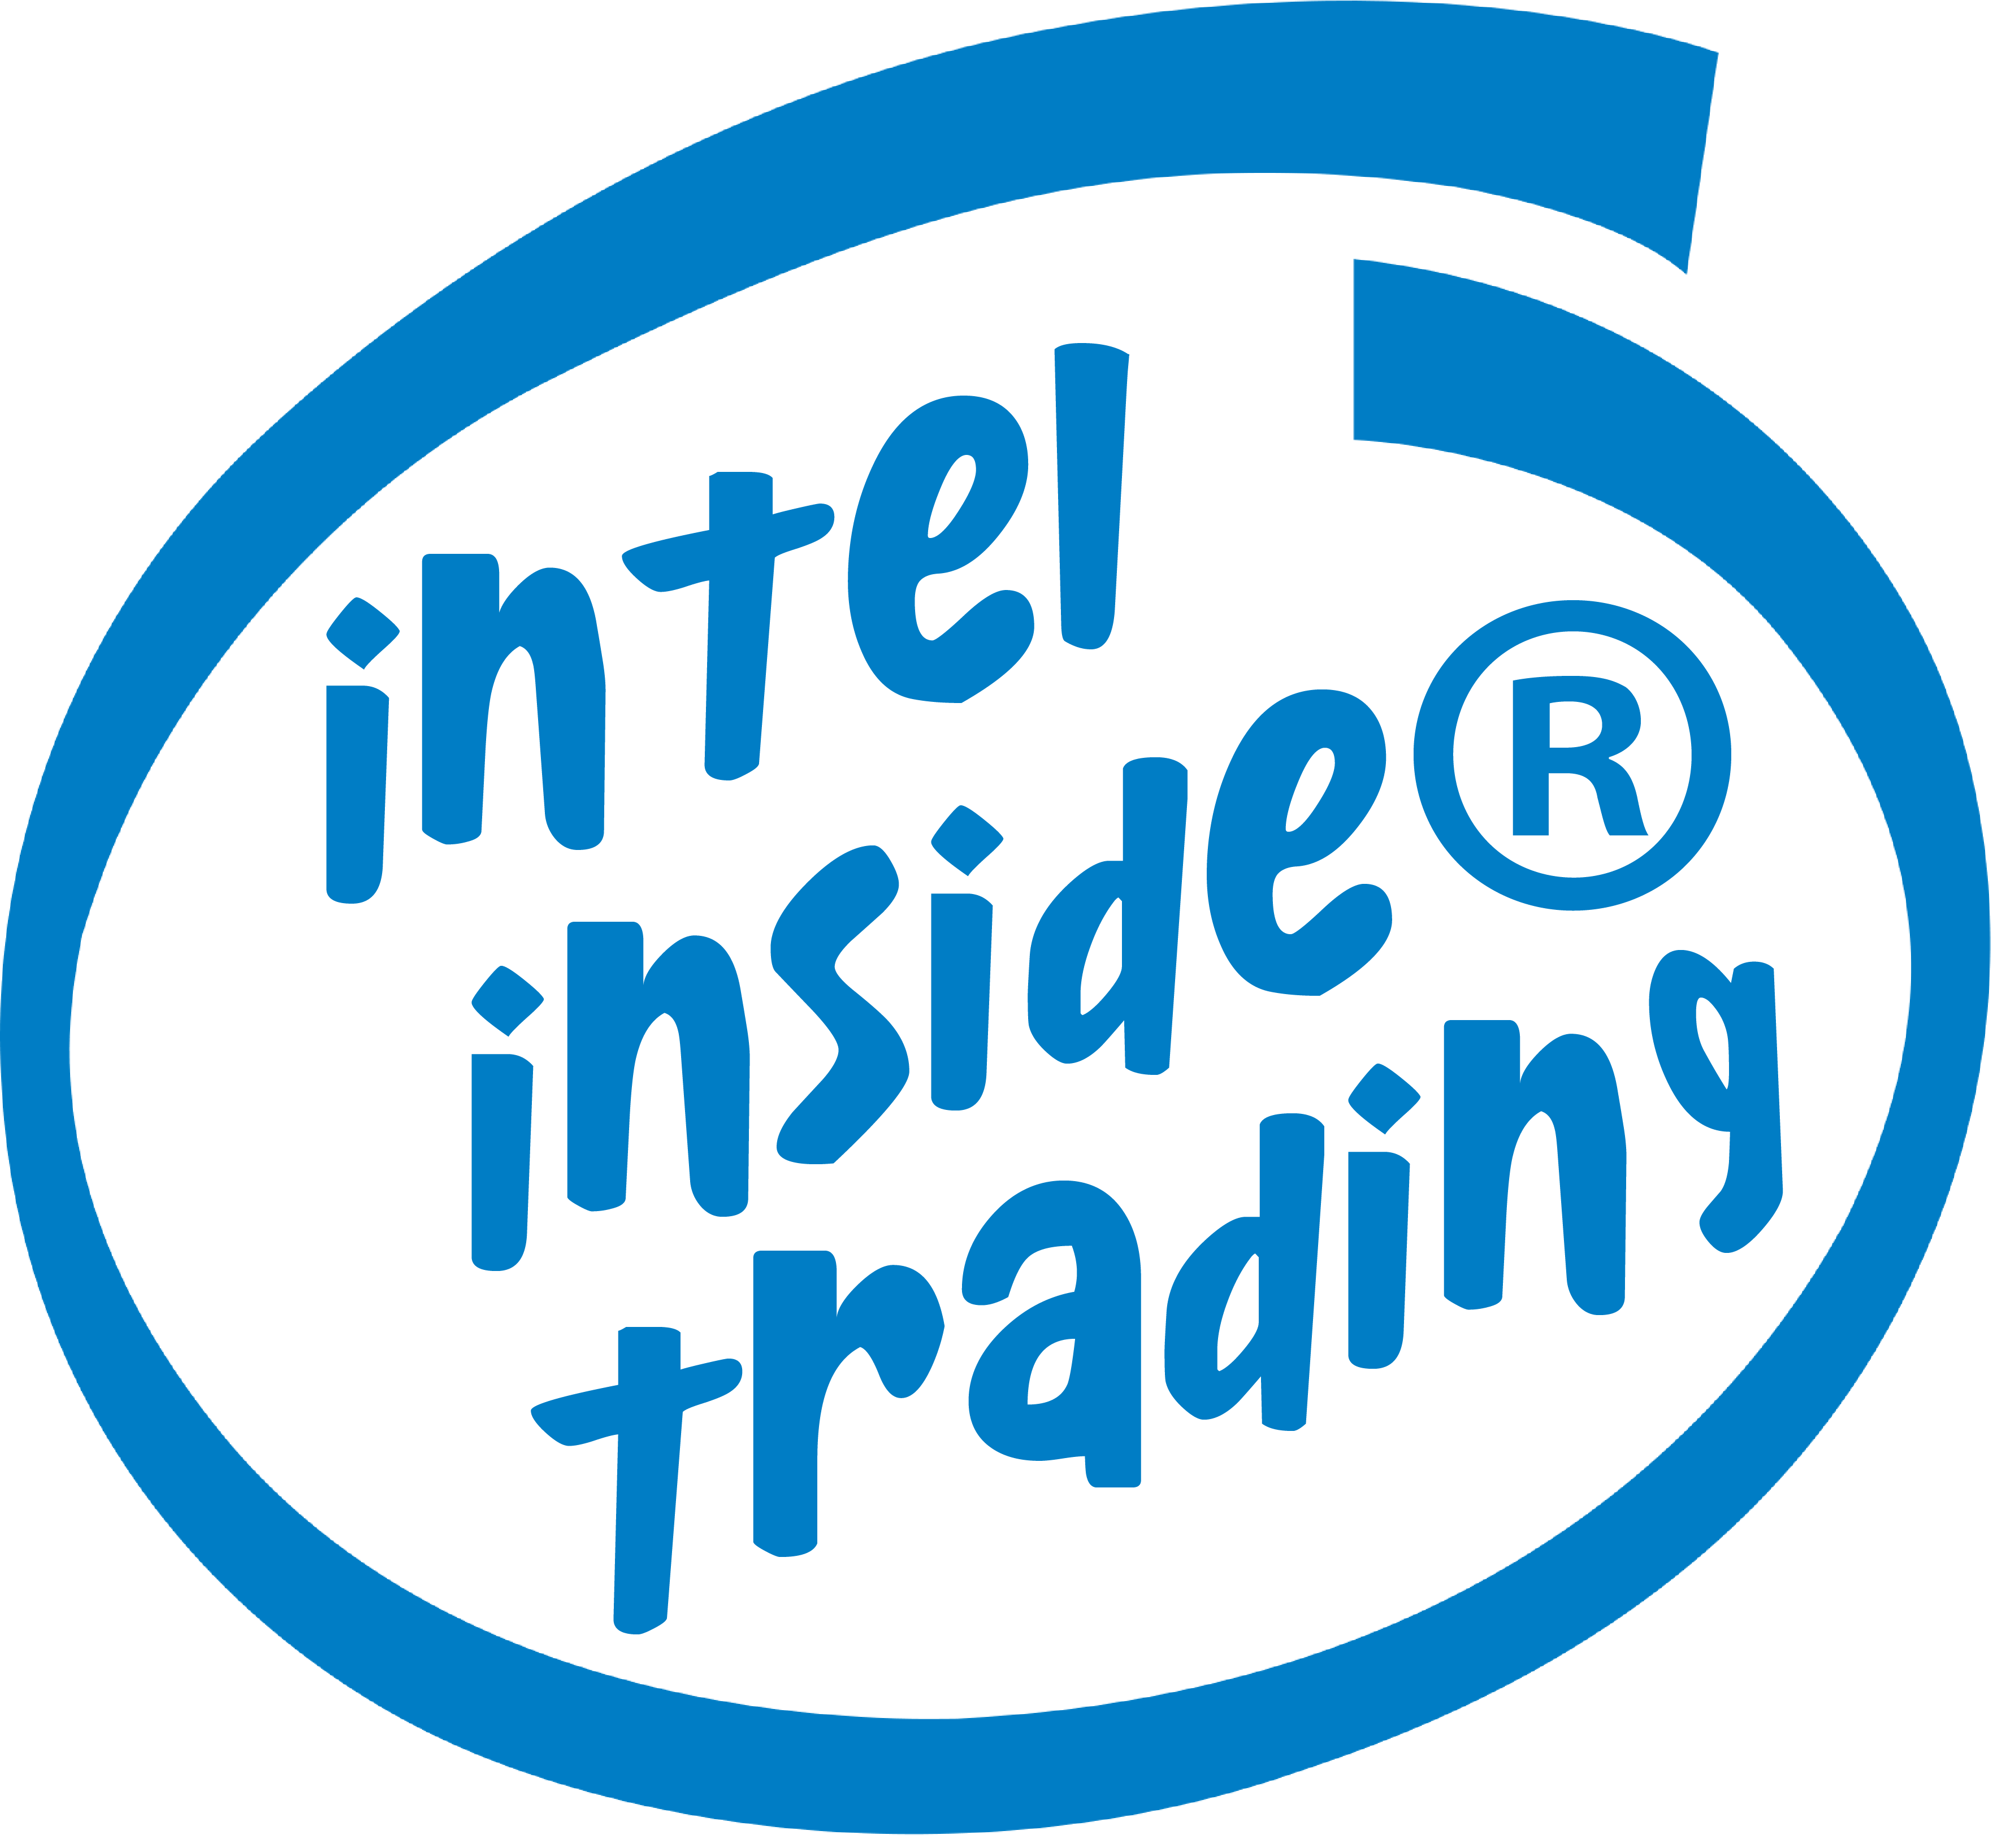 Funny Intel Logo - The old Intel logo makes sense now : ProgrammerHumor